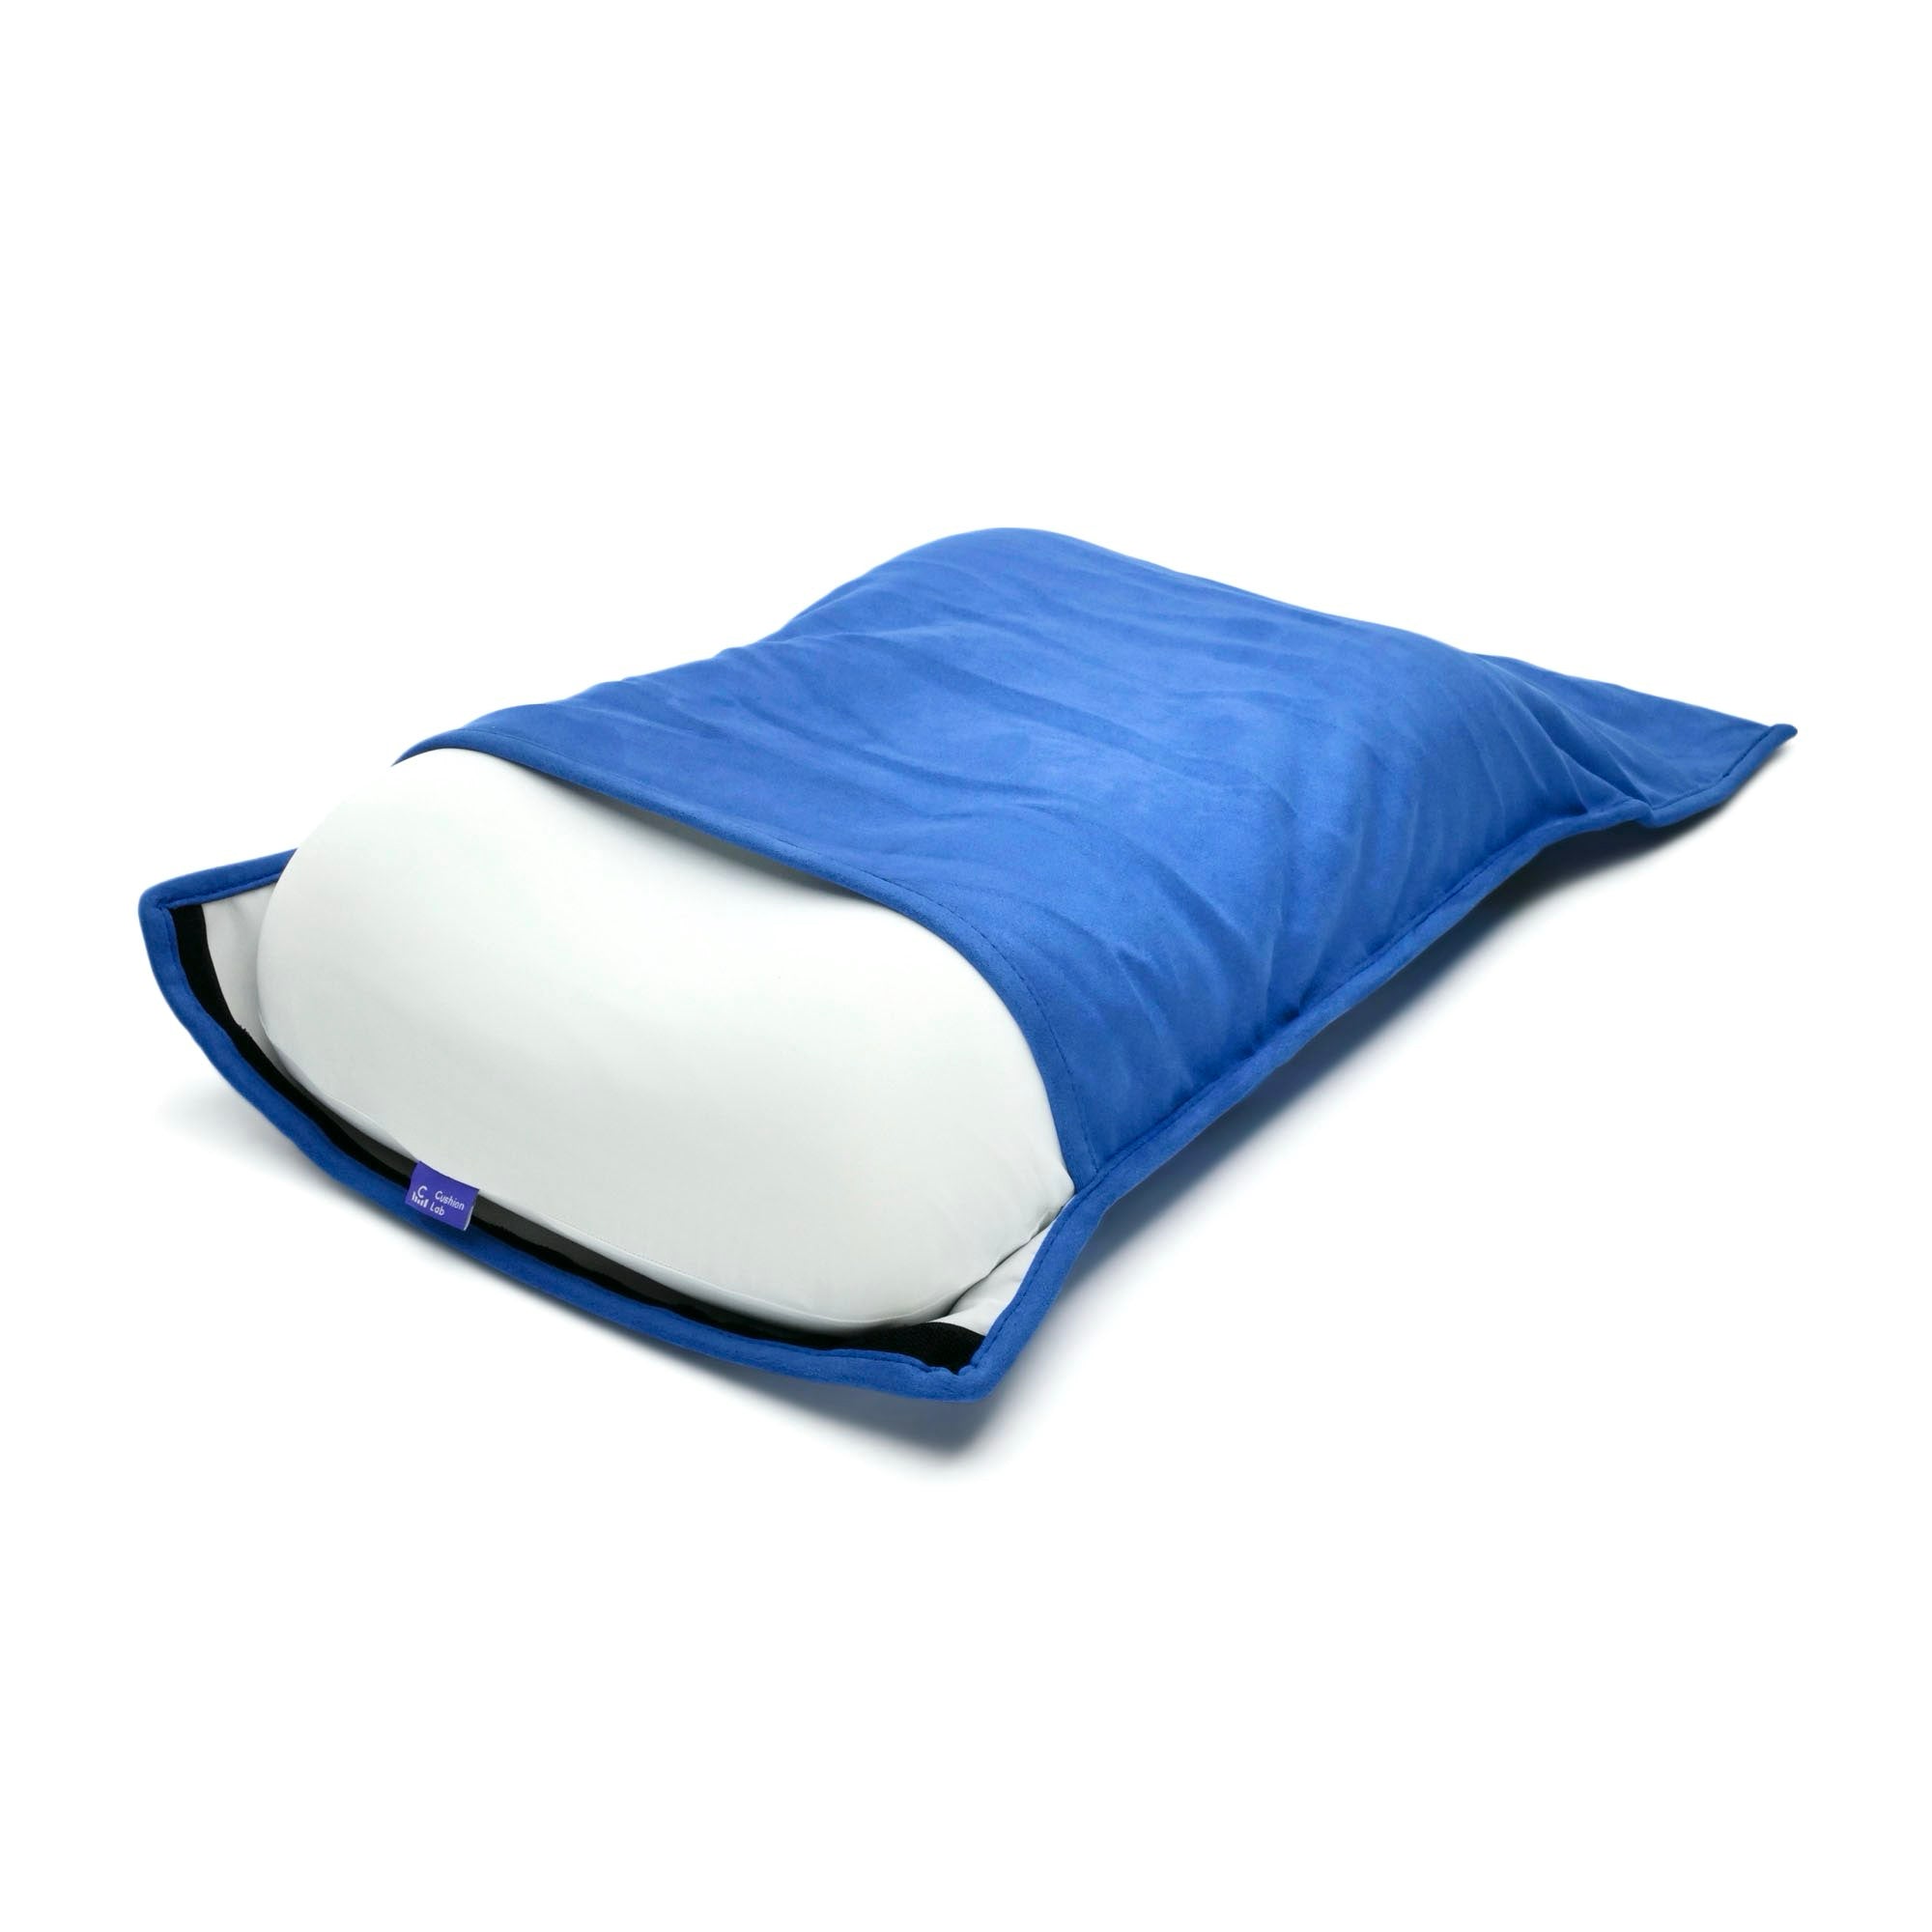 Cushion Lab Travel Deep Sleep Pillow - Black